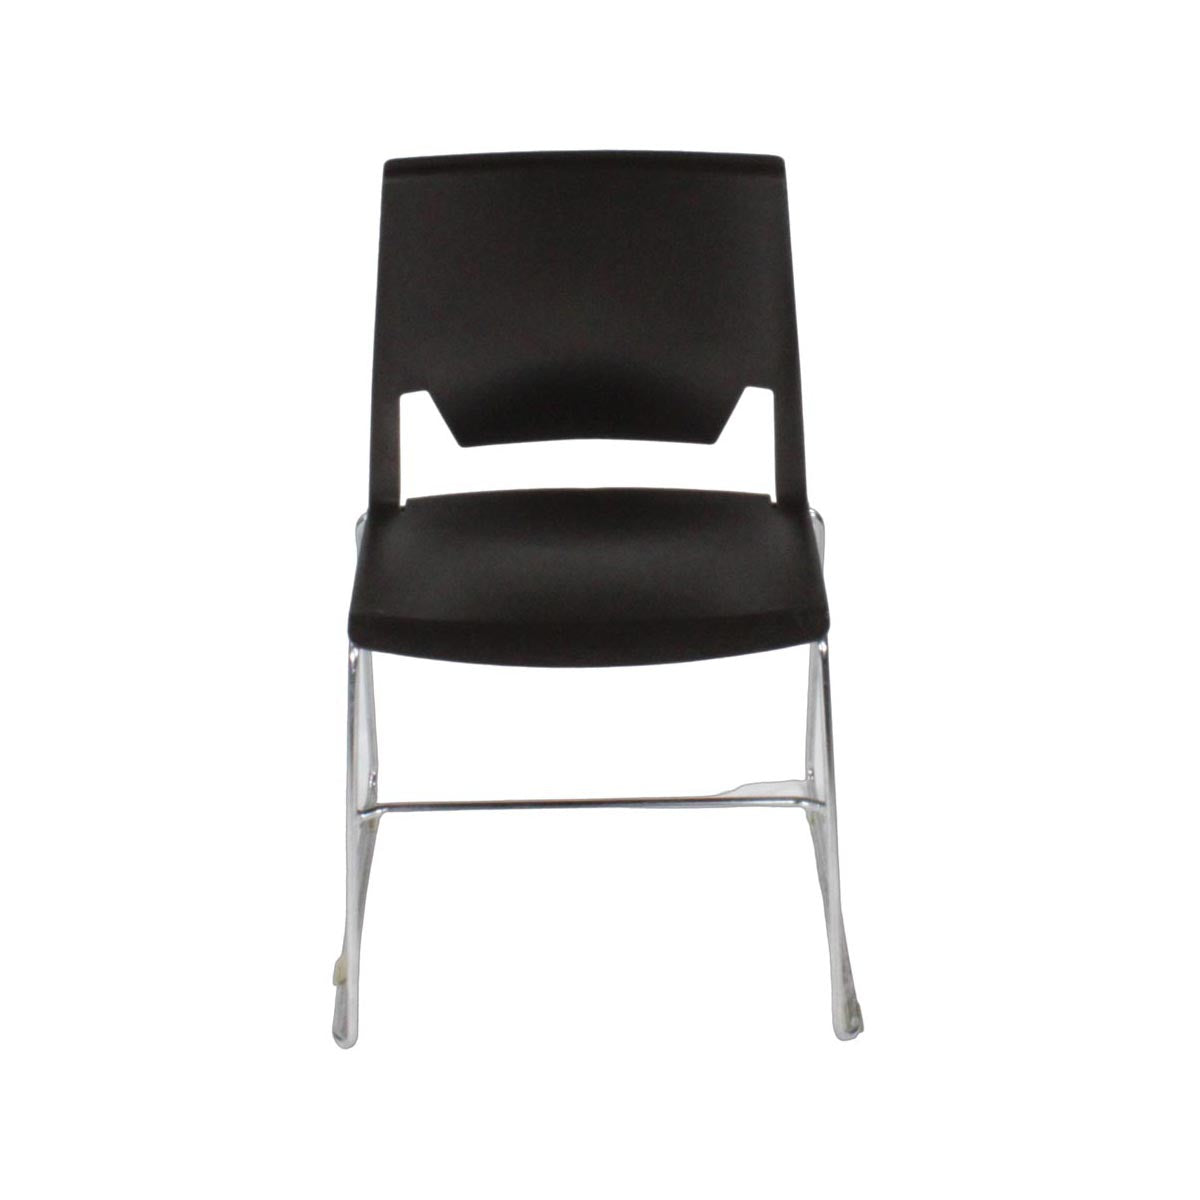 Haworth: Very Comforto 62 Chair in Black - Refurbished